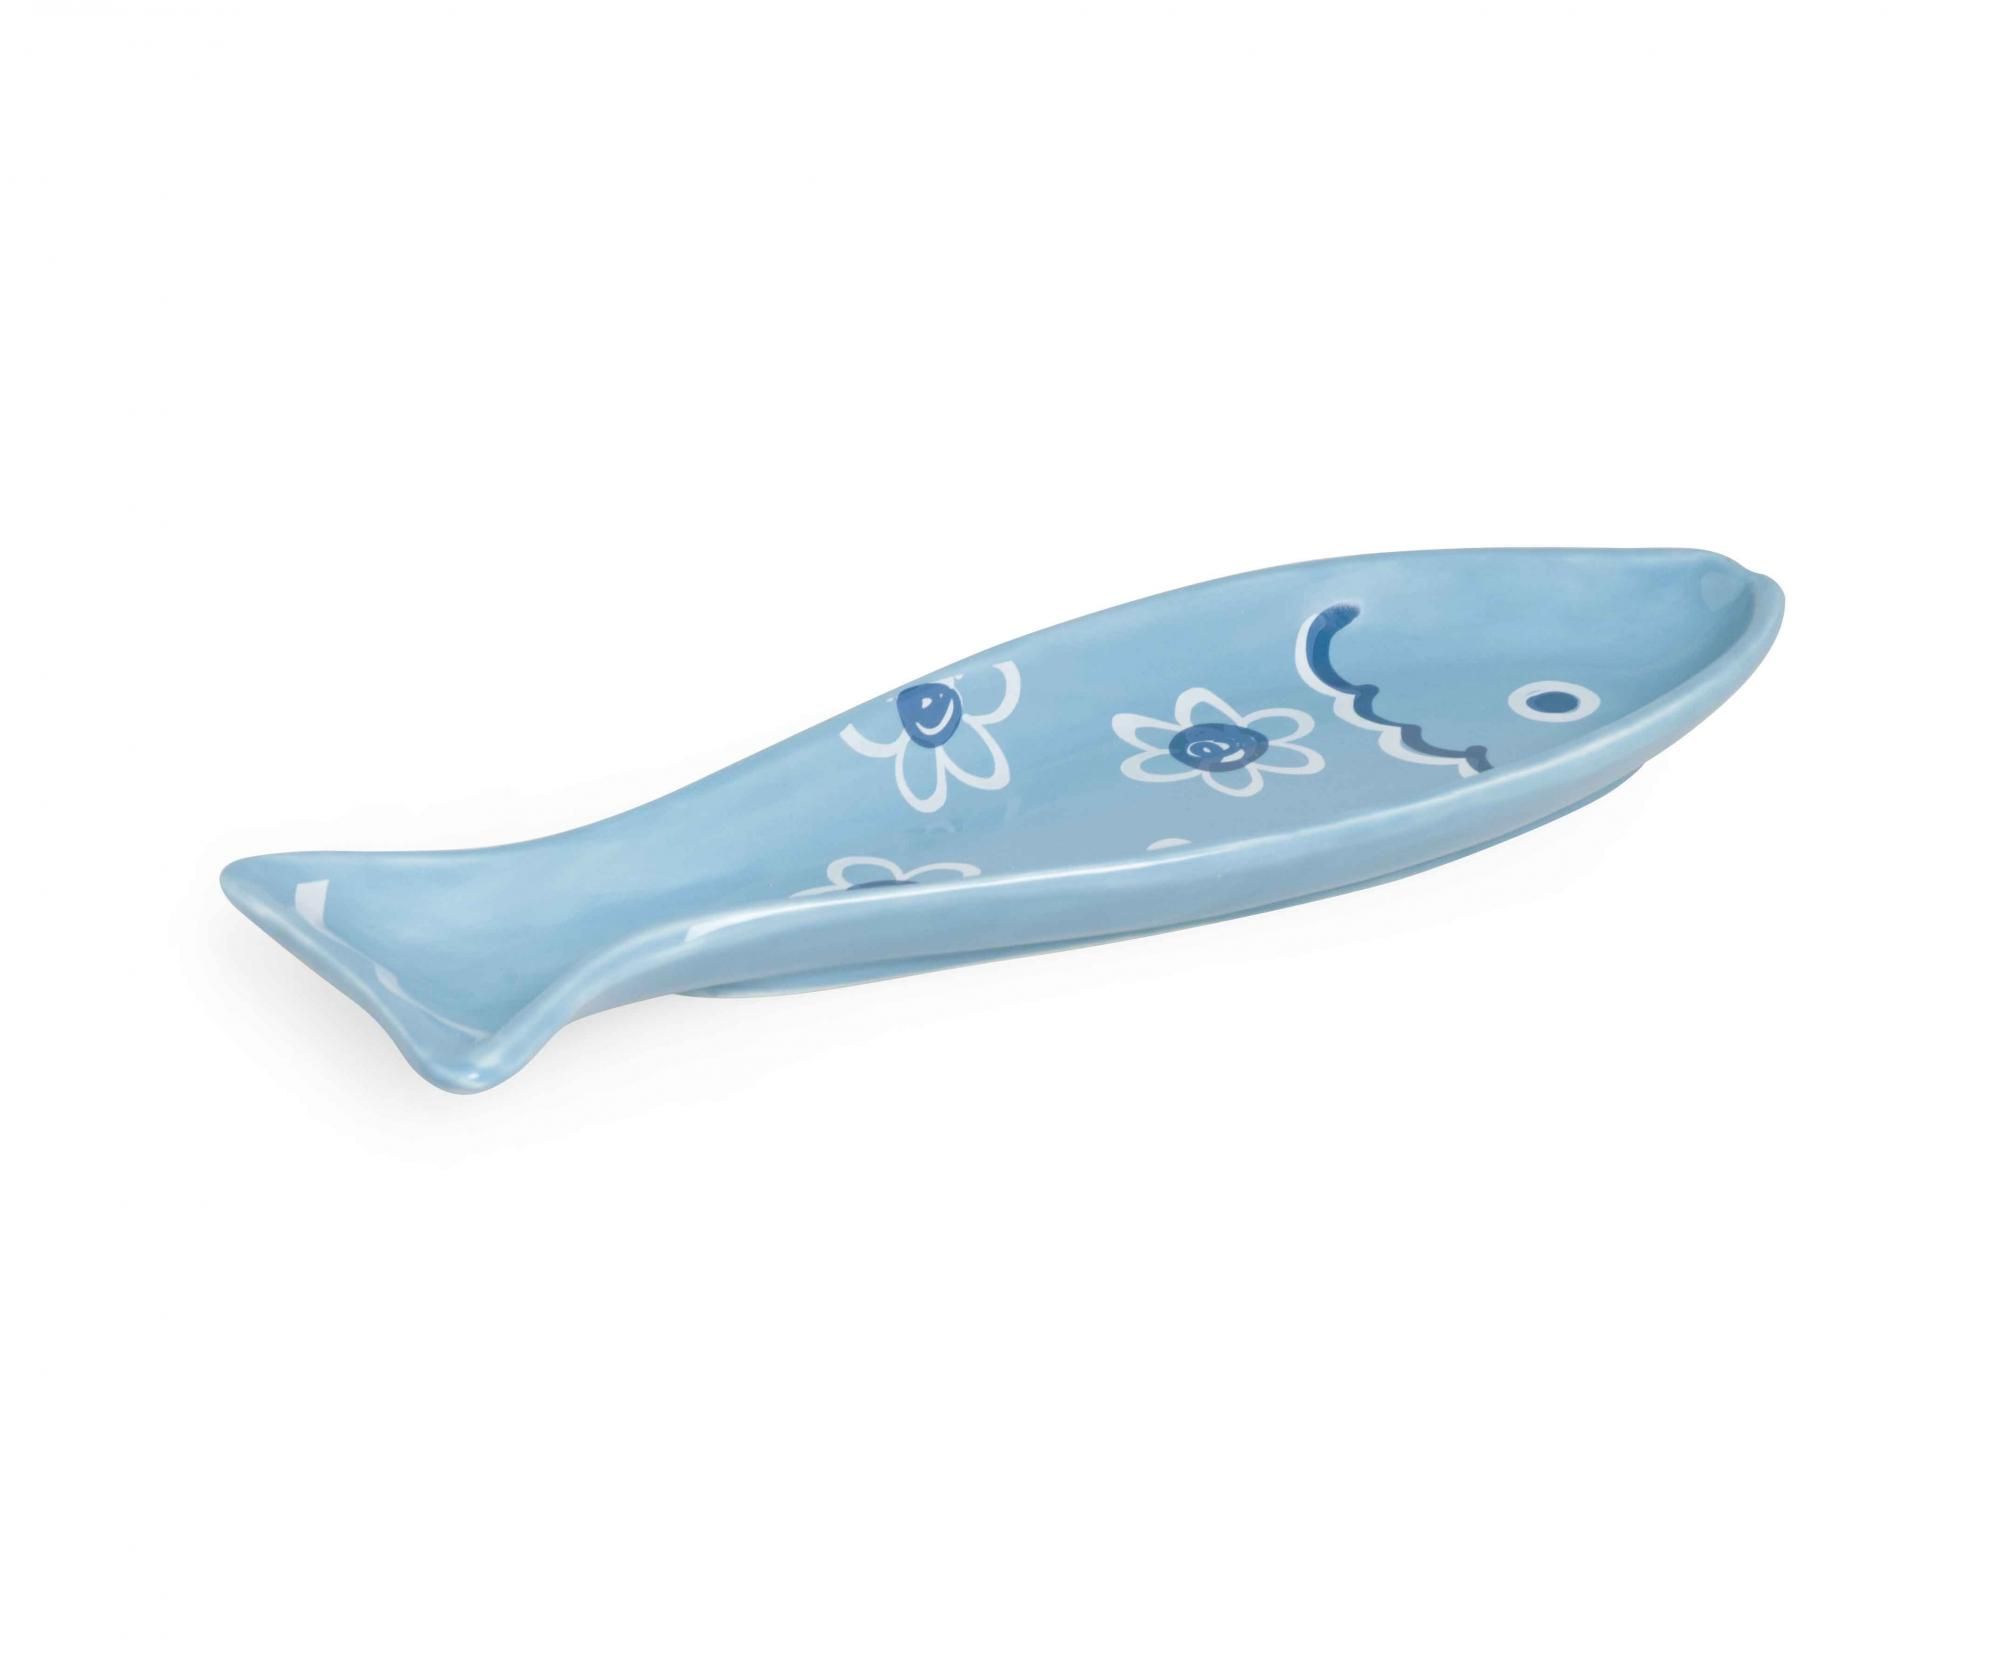 Suport pentru lingura Ocean Fish – Excelsa, Albastru